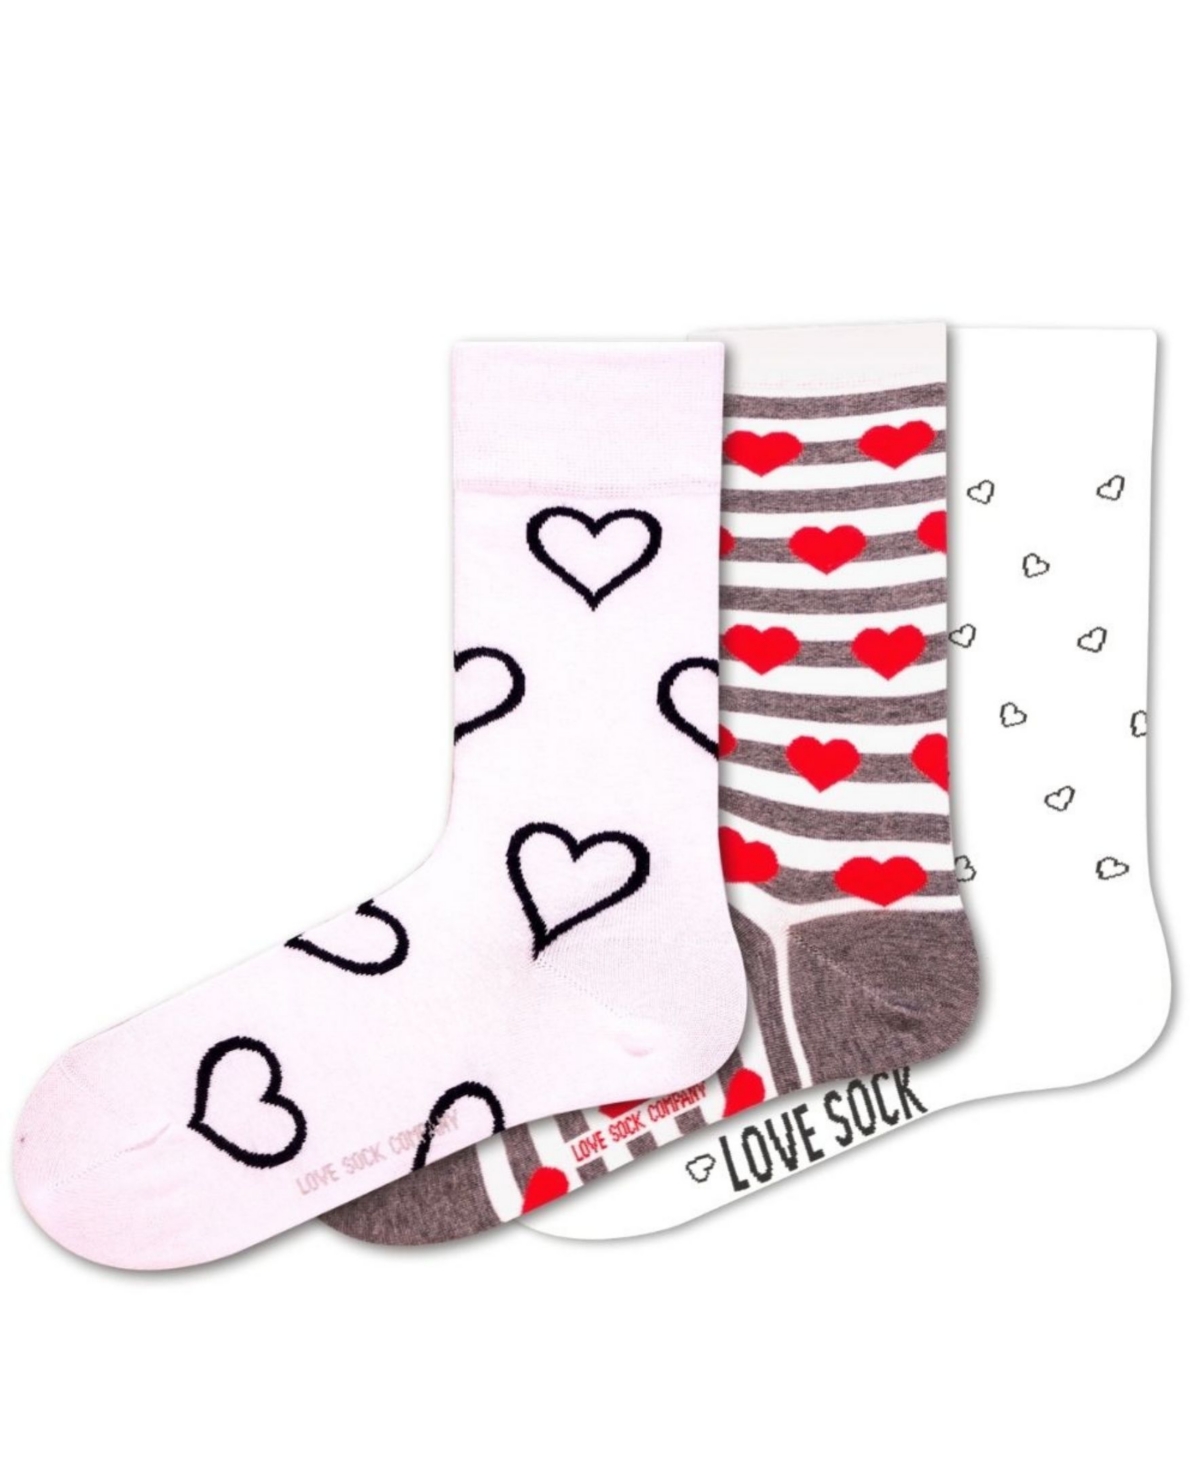 Hearts Bundle Women's 3 Pack Cotton Seamless Toe Novelty Socks - Multi